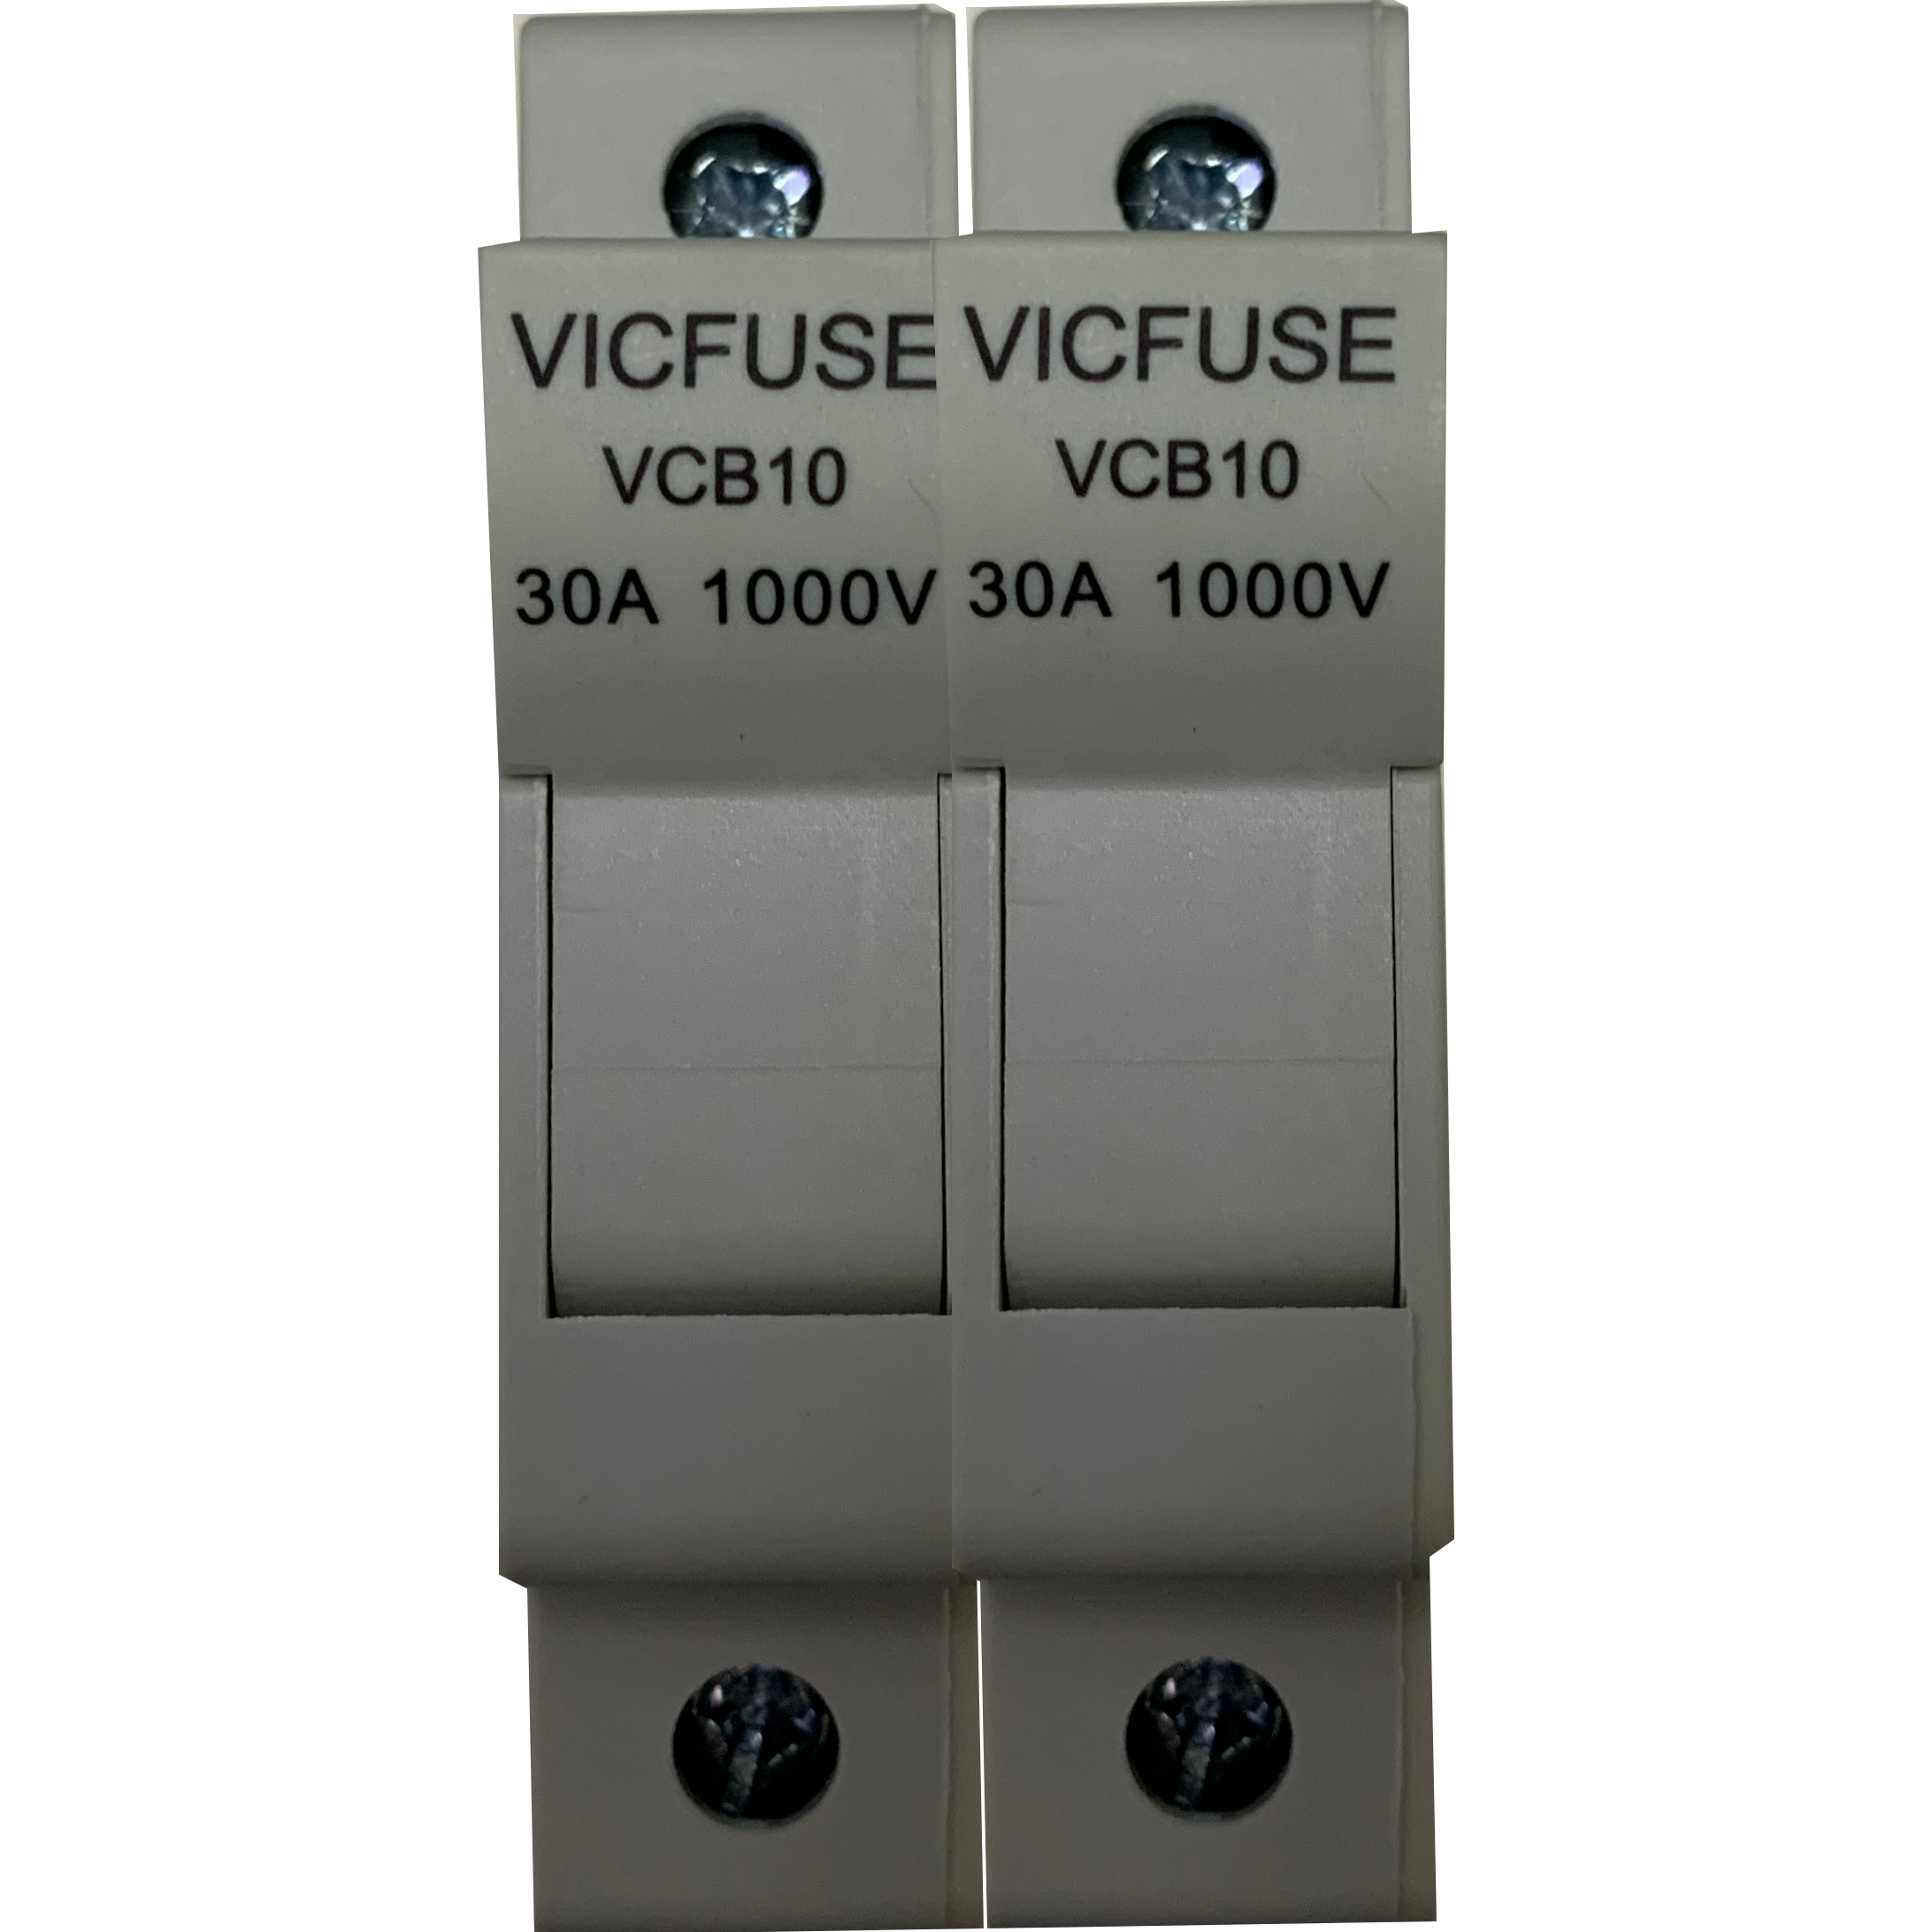 VCB10-30 2P 1000V, DIN Rail Mount Fuse Holder Two Pole for 10.3 x 38mm, 1000VDC Solar gPV Fuse